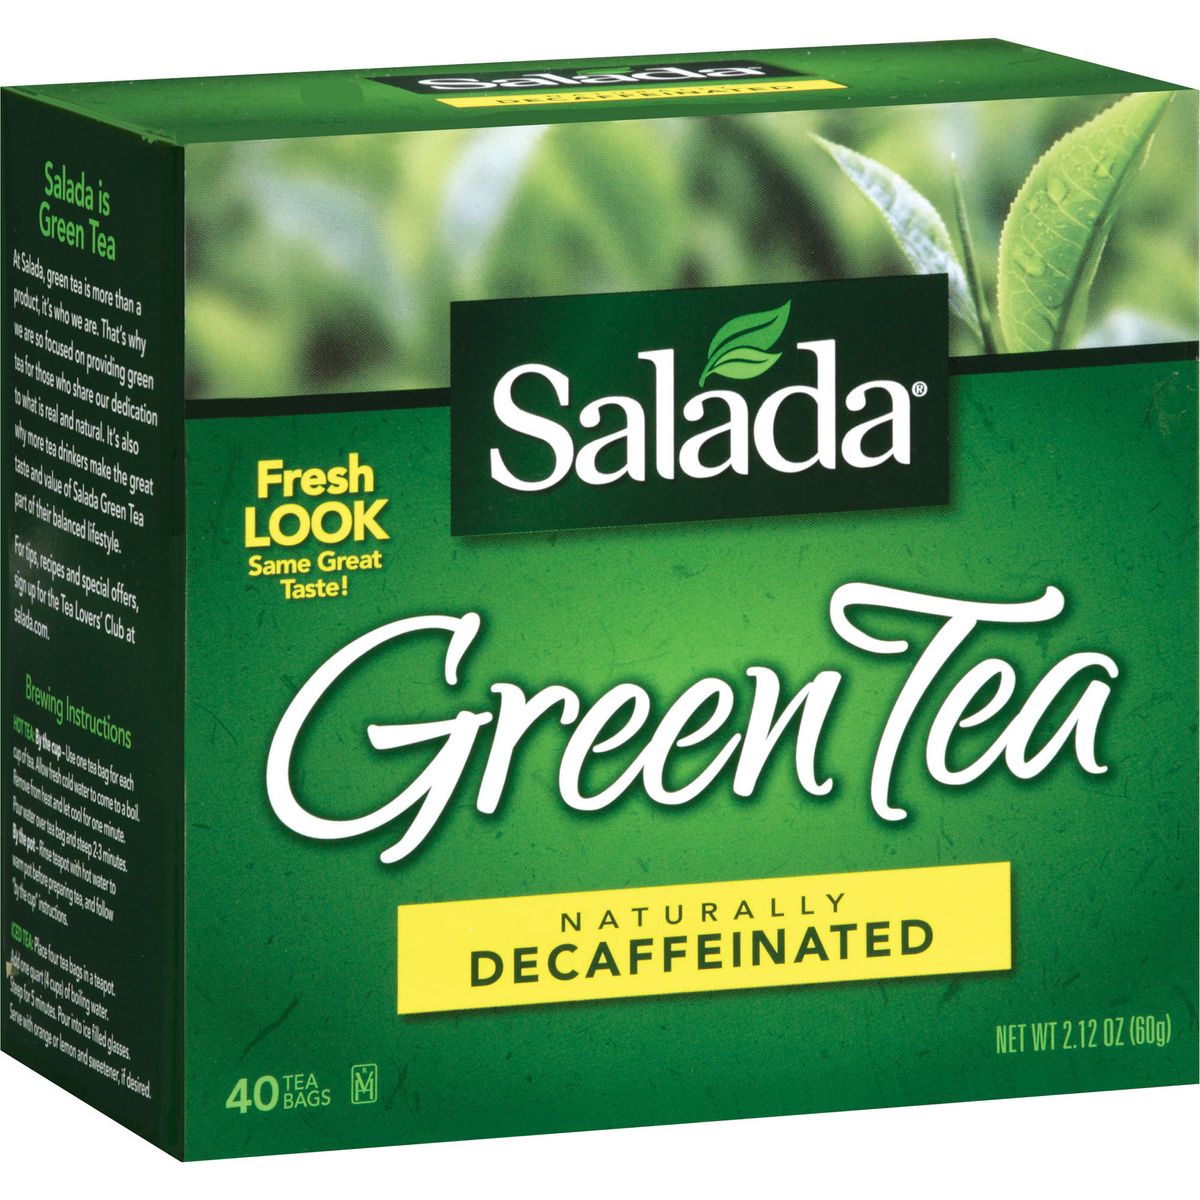 [RDY] [送料無料] Salada ナチュラリー カフェインレス緑茶 40個入り 6個入り [楽天海外通販] | Salada Naturally Decaffeinated Green Tea, 40ct Pack of 6